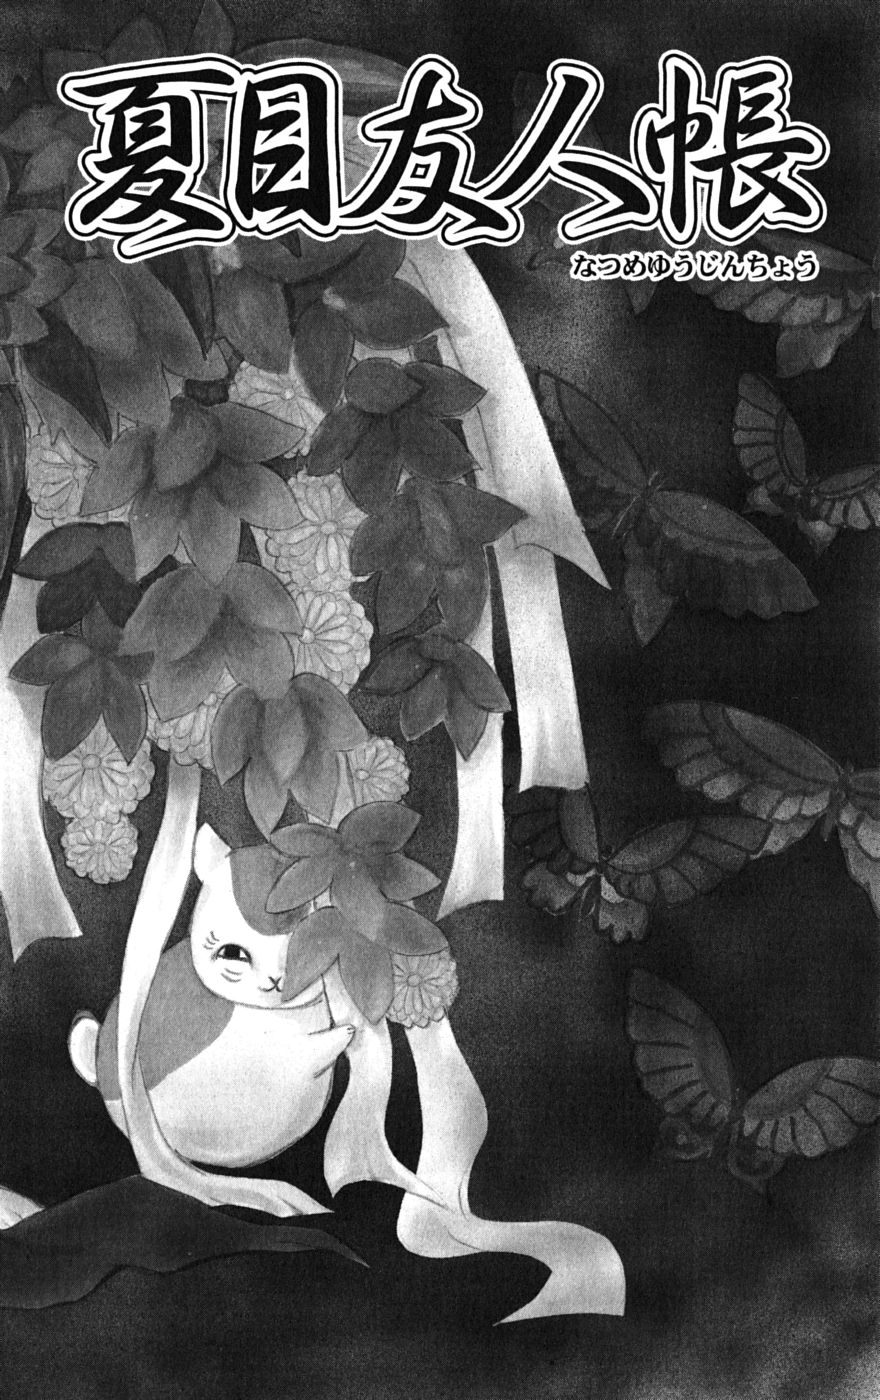 Natsume Yuujinchou Vol.10-Chapter.38-Chapter-38 Image